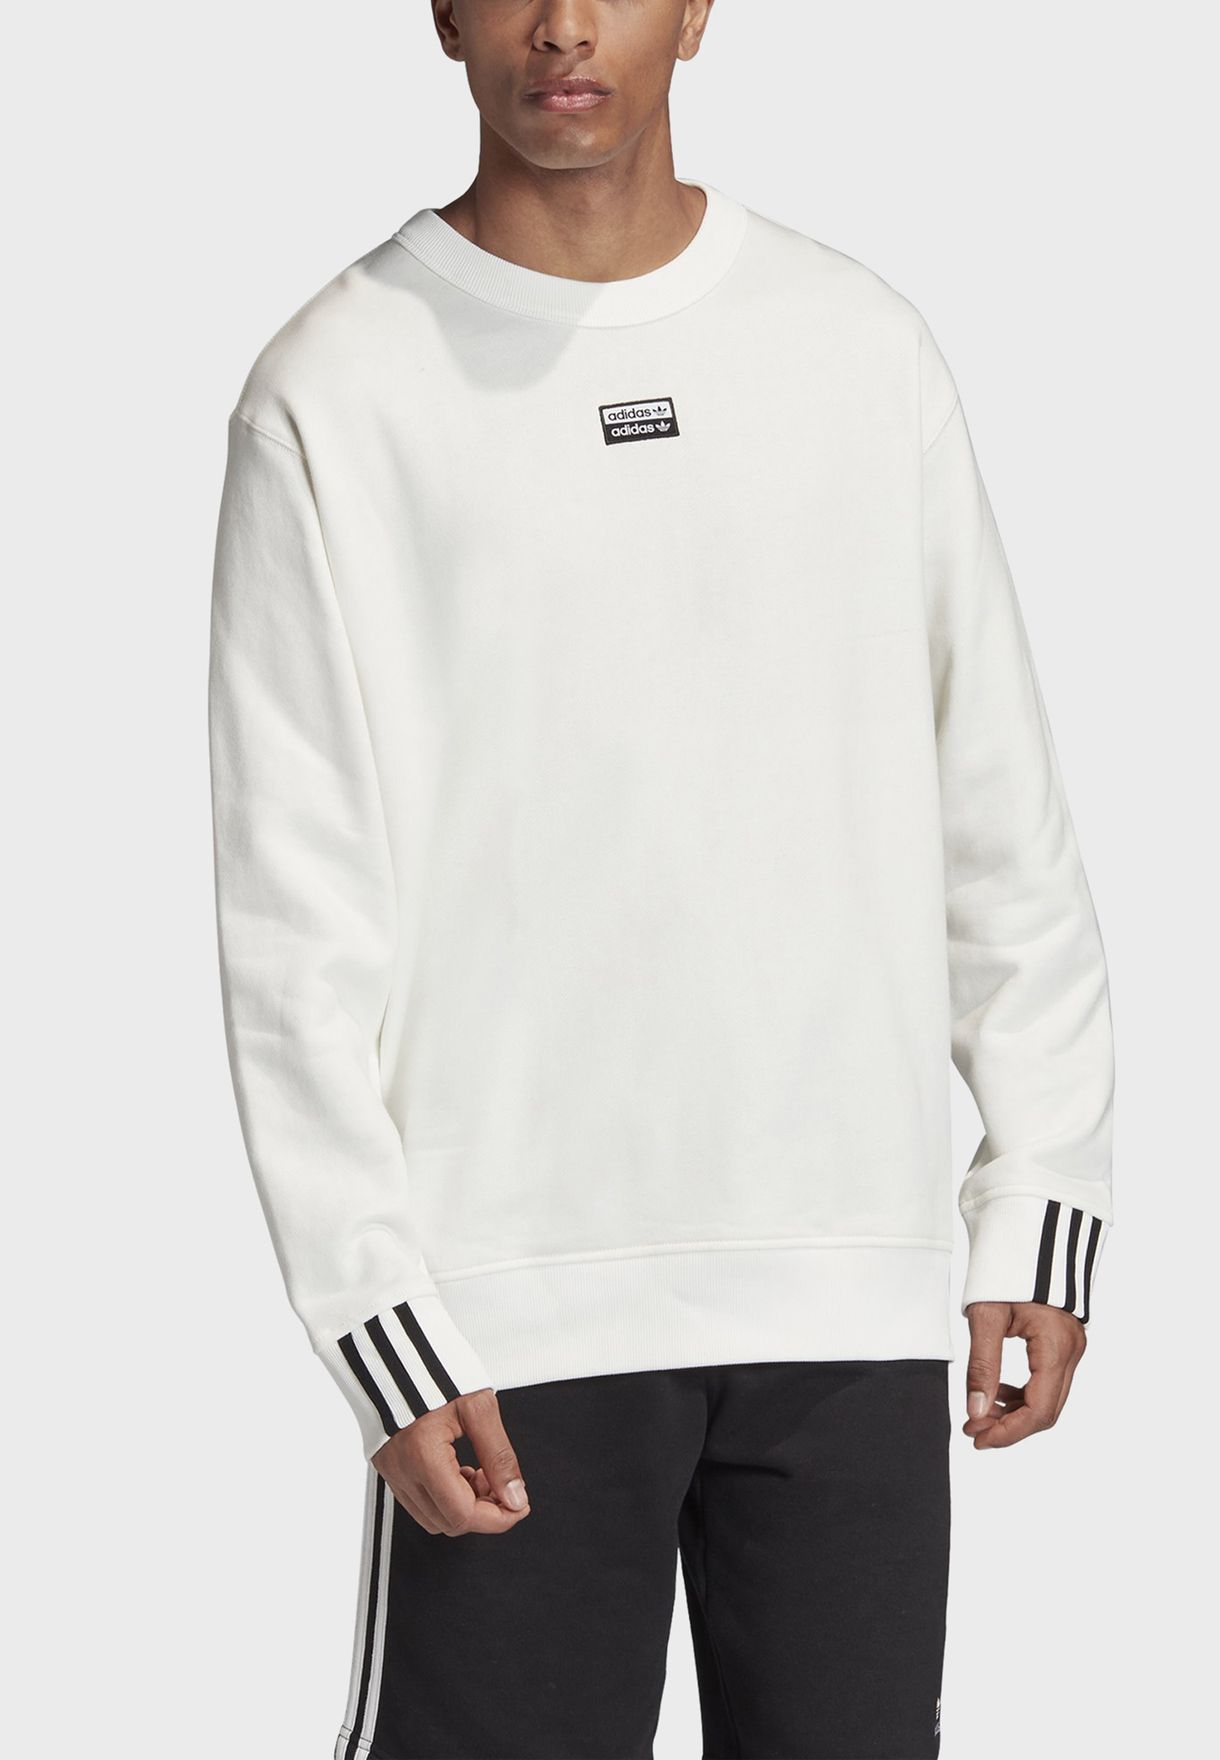 adidas originals ryv hoodie in white